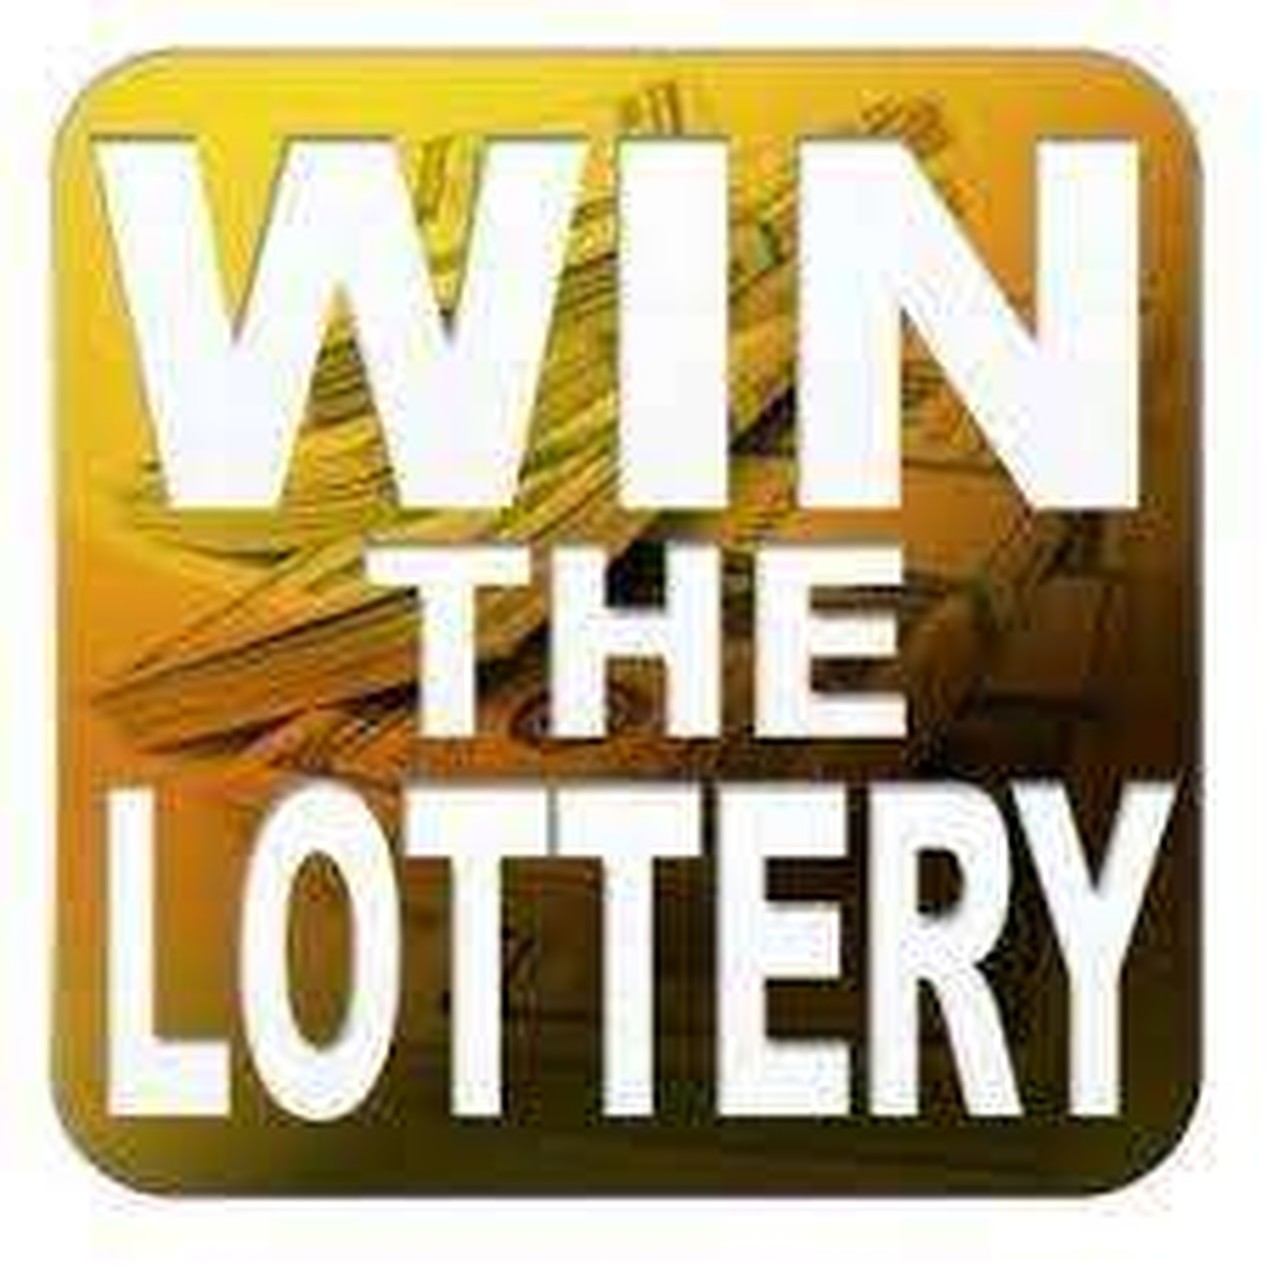 online magic lottery winning powerful spells work to win jackpot call/whats app +27782293659